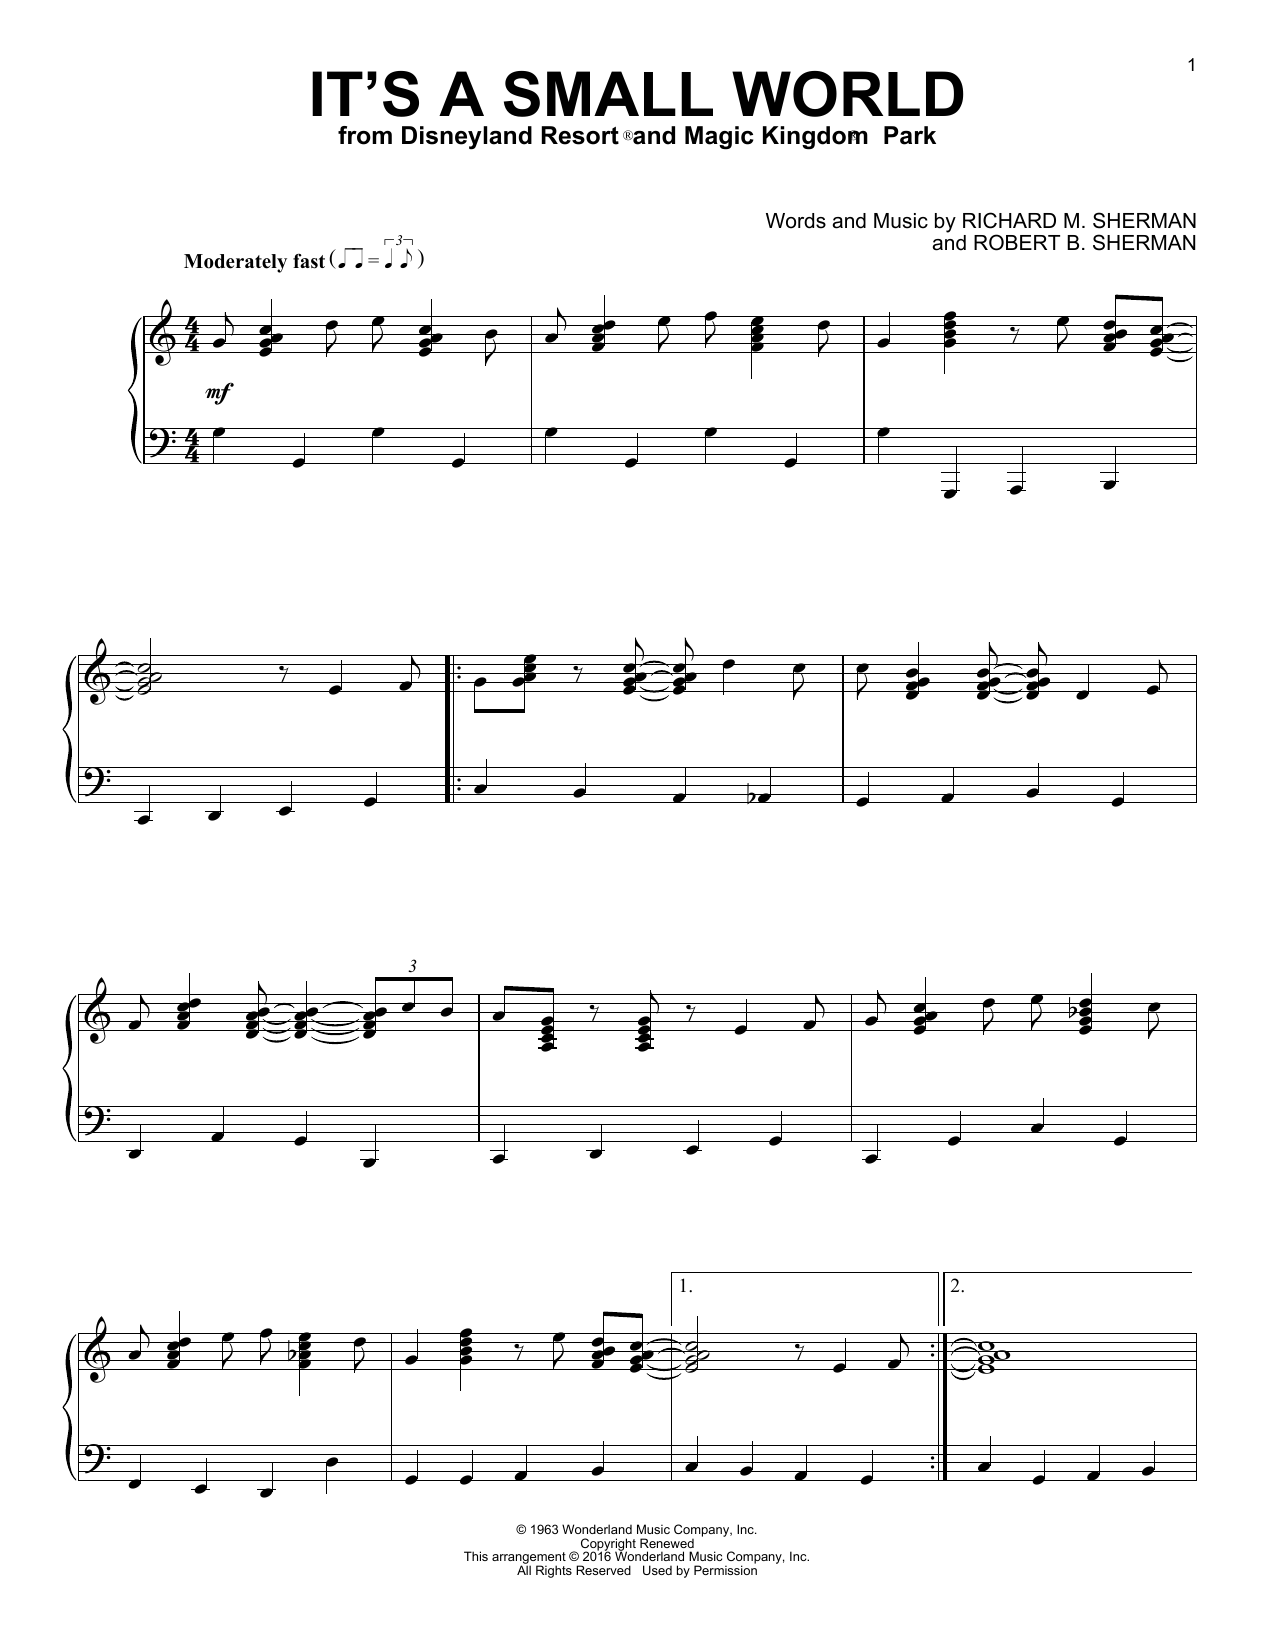 Richard & Robert Sherman It's A Small World [Jazz version] Sheet Music Notes & Chords for Piano - Download or Print PDF